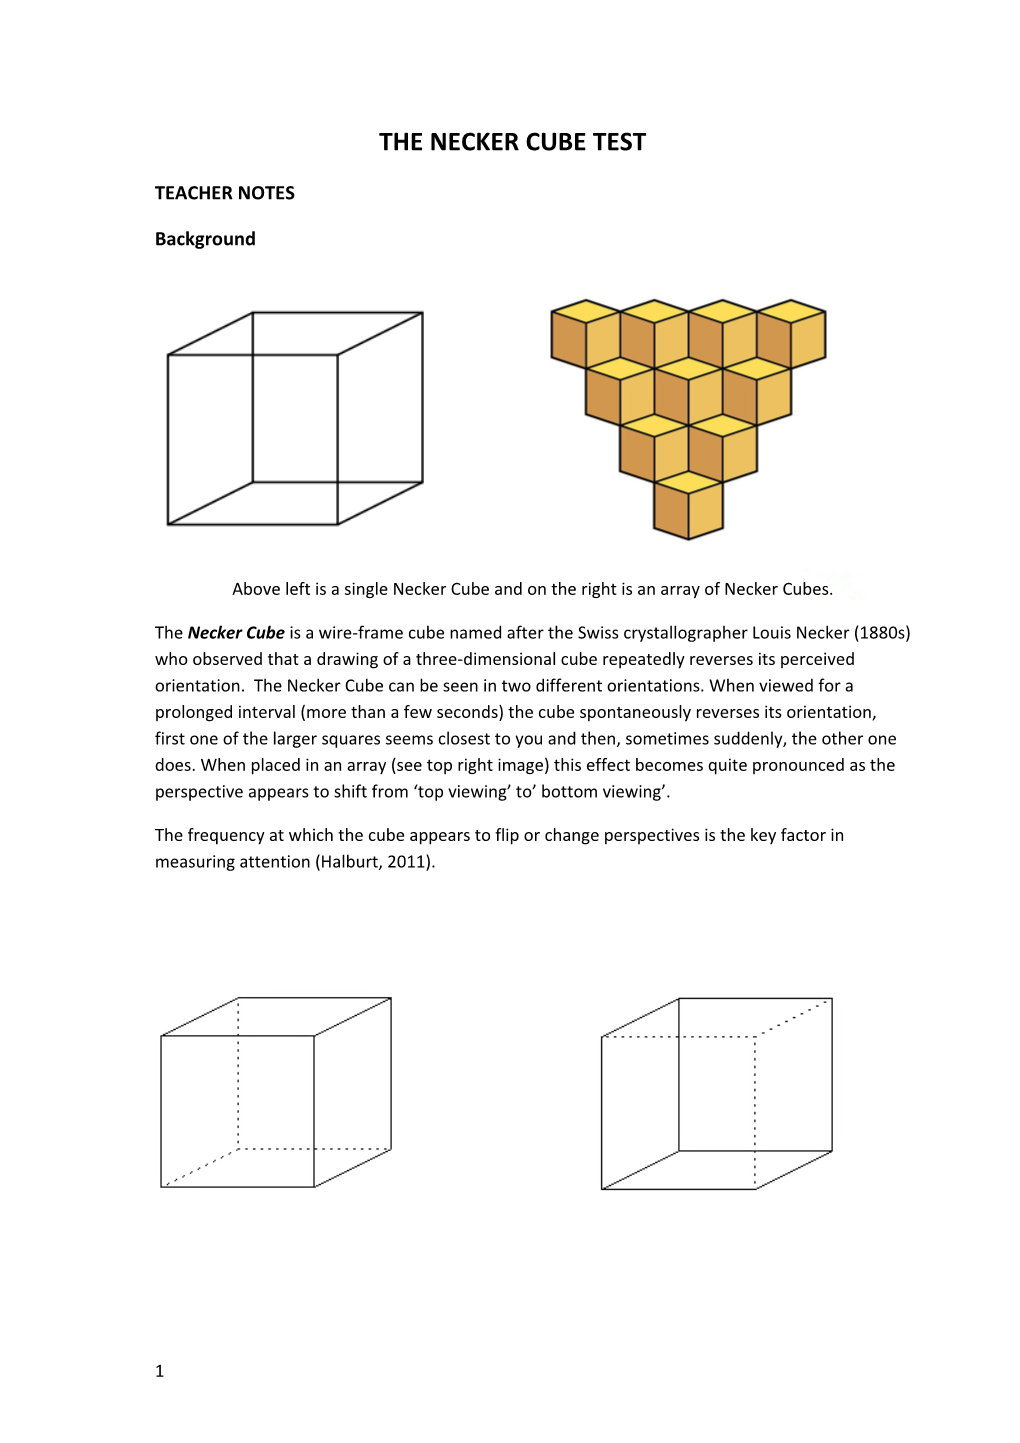 The Necker Cube Test